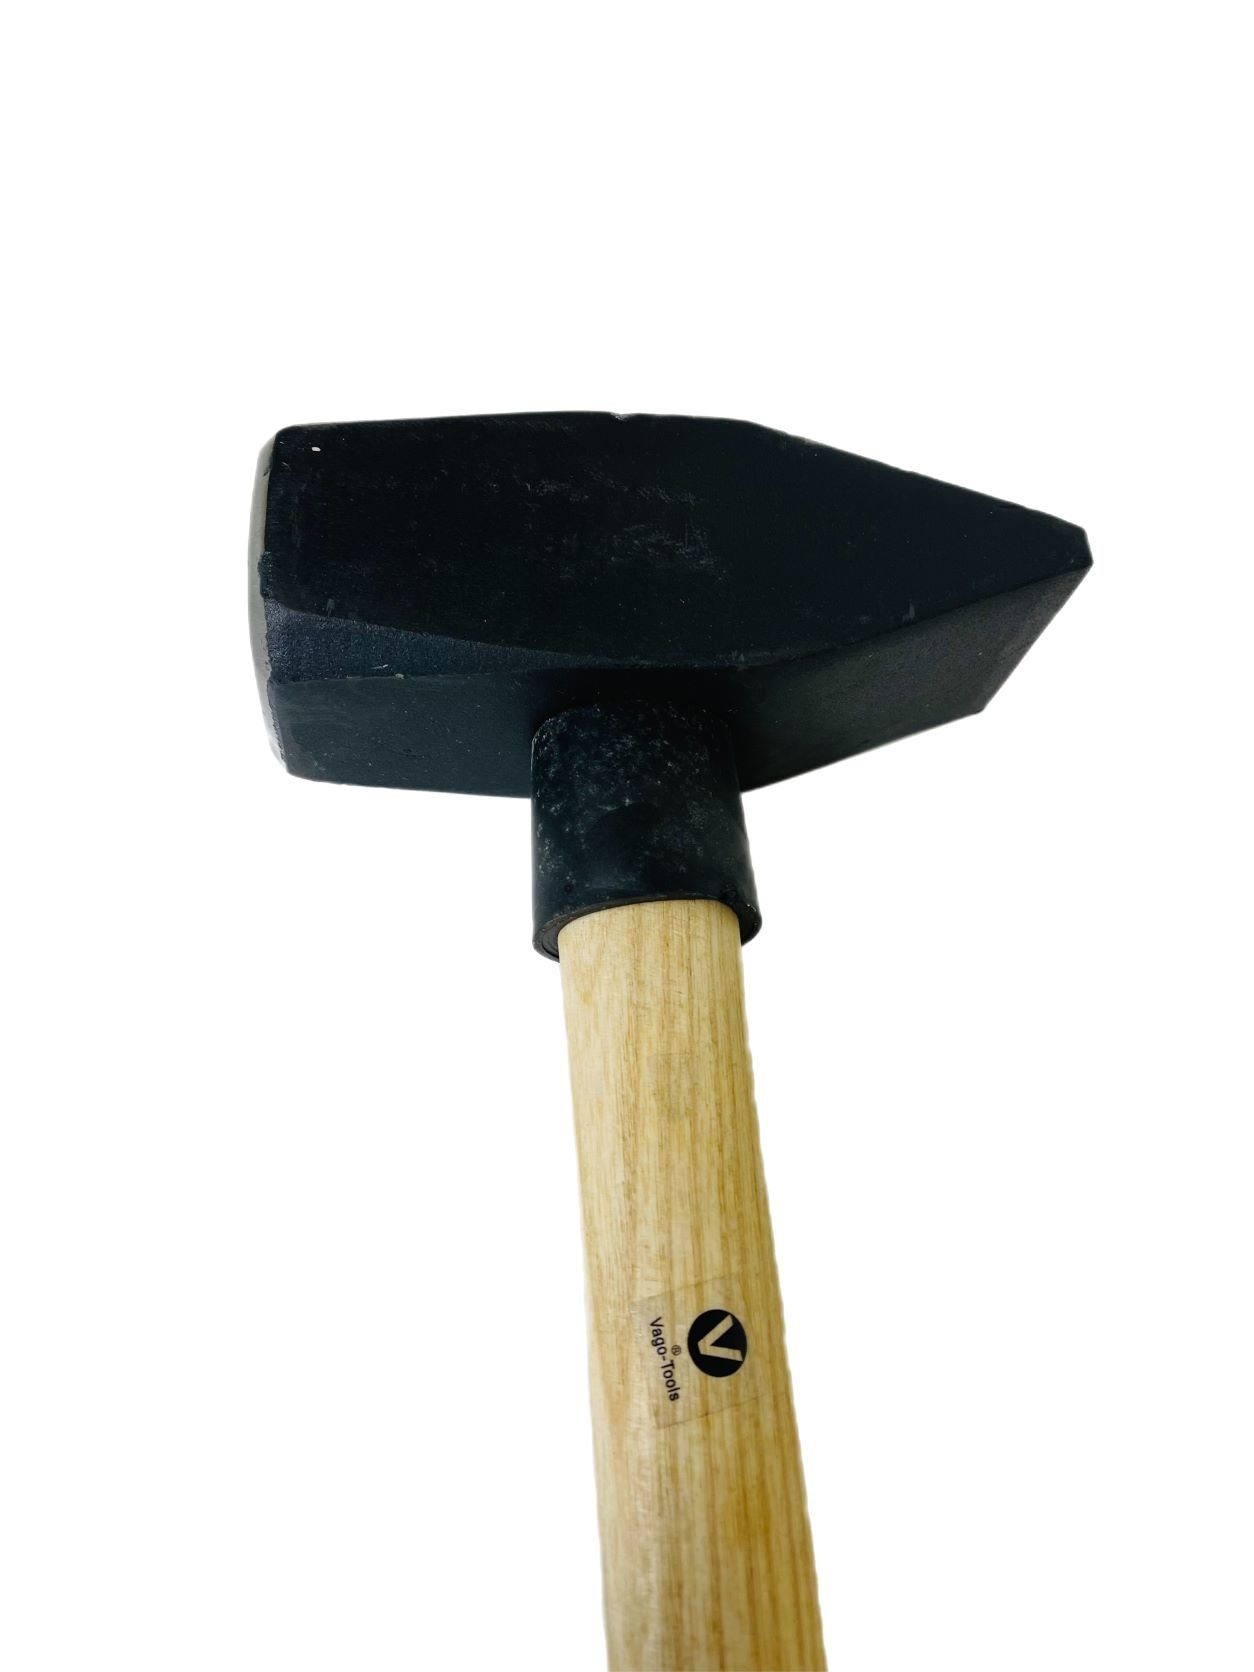 kg 5 Hammer Holzstiel Stielschutz Schlosserhammer VaGo-Tools Hammer